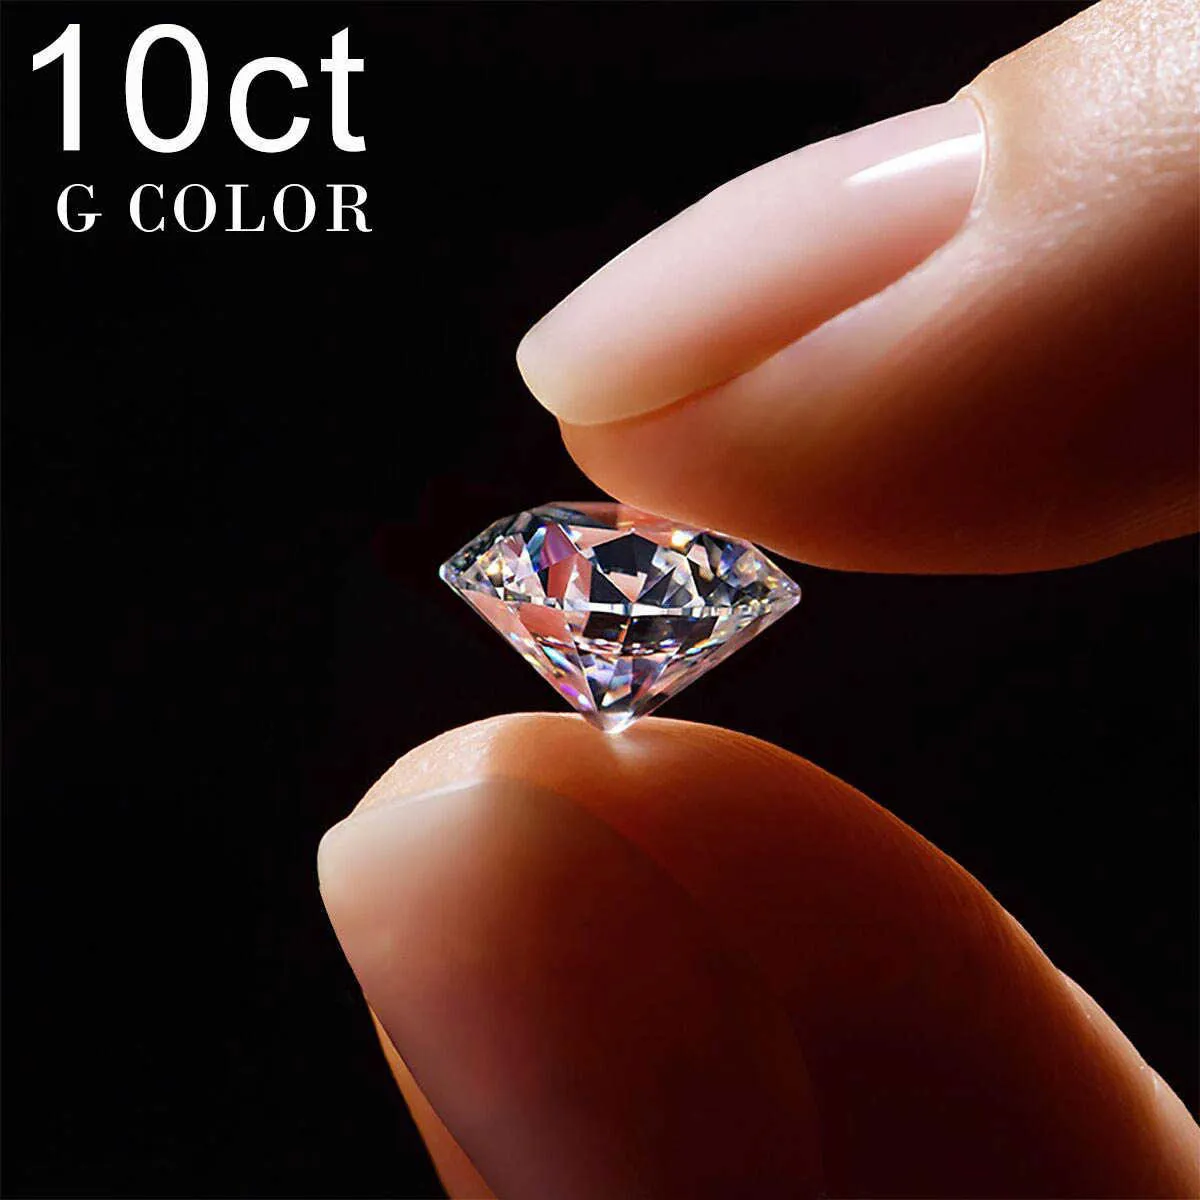 10ct 14mm G 색상 정품 느슨한 보석 Moissanite 스톤 패스 다이아몬드 테스터 GRA 인증서 8 하트 8 화살 큰 보석 H1015